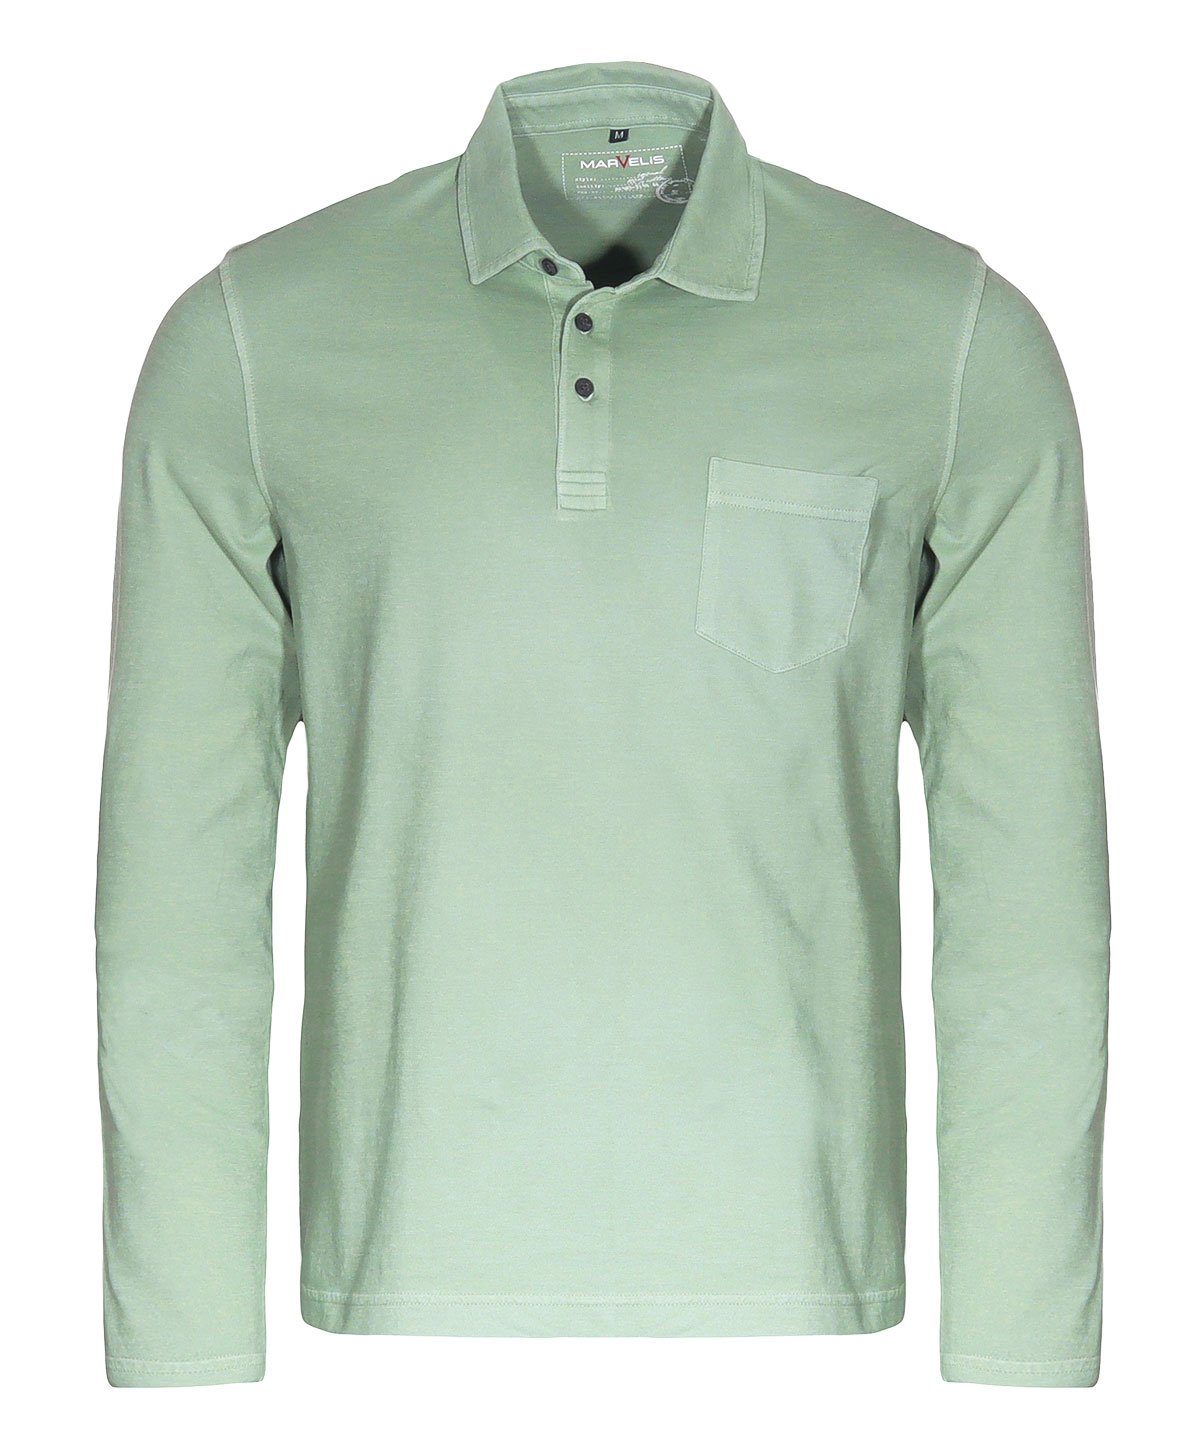 Hellgrün - Polokragen Poloshirt Poloshirt - - MARVELIS - Casual Einfarbig Fit